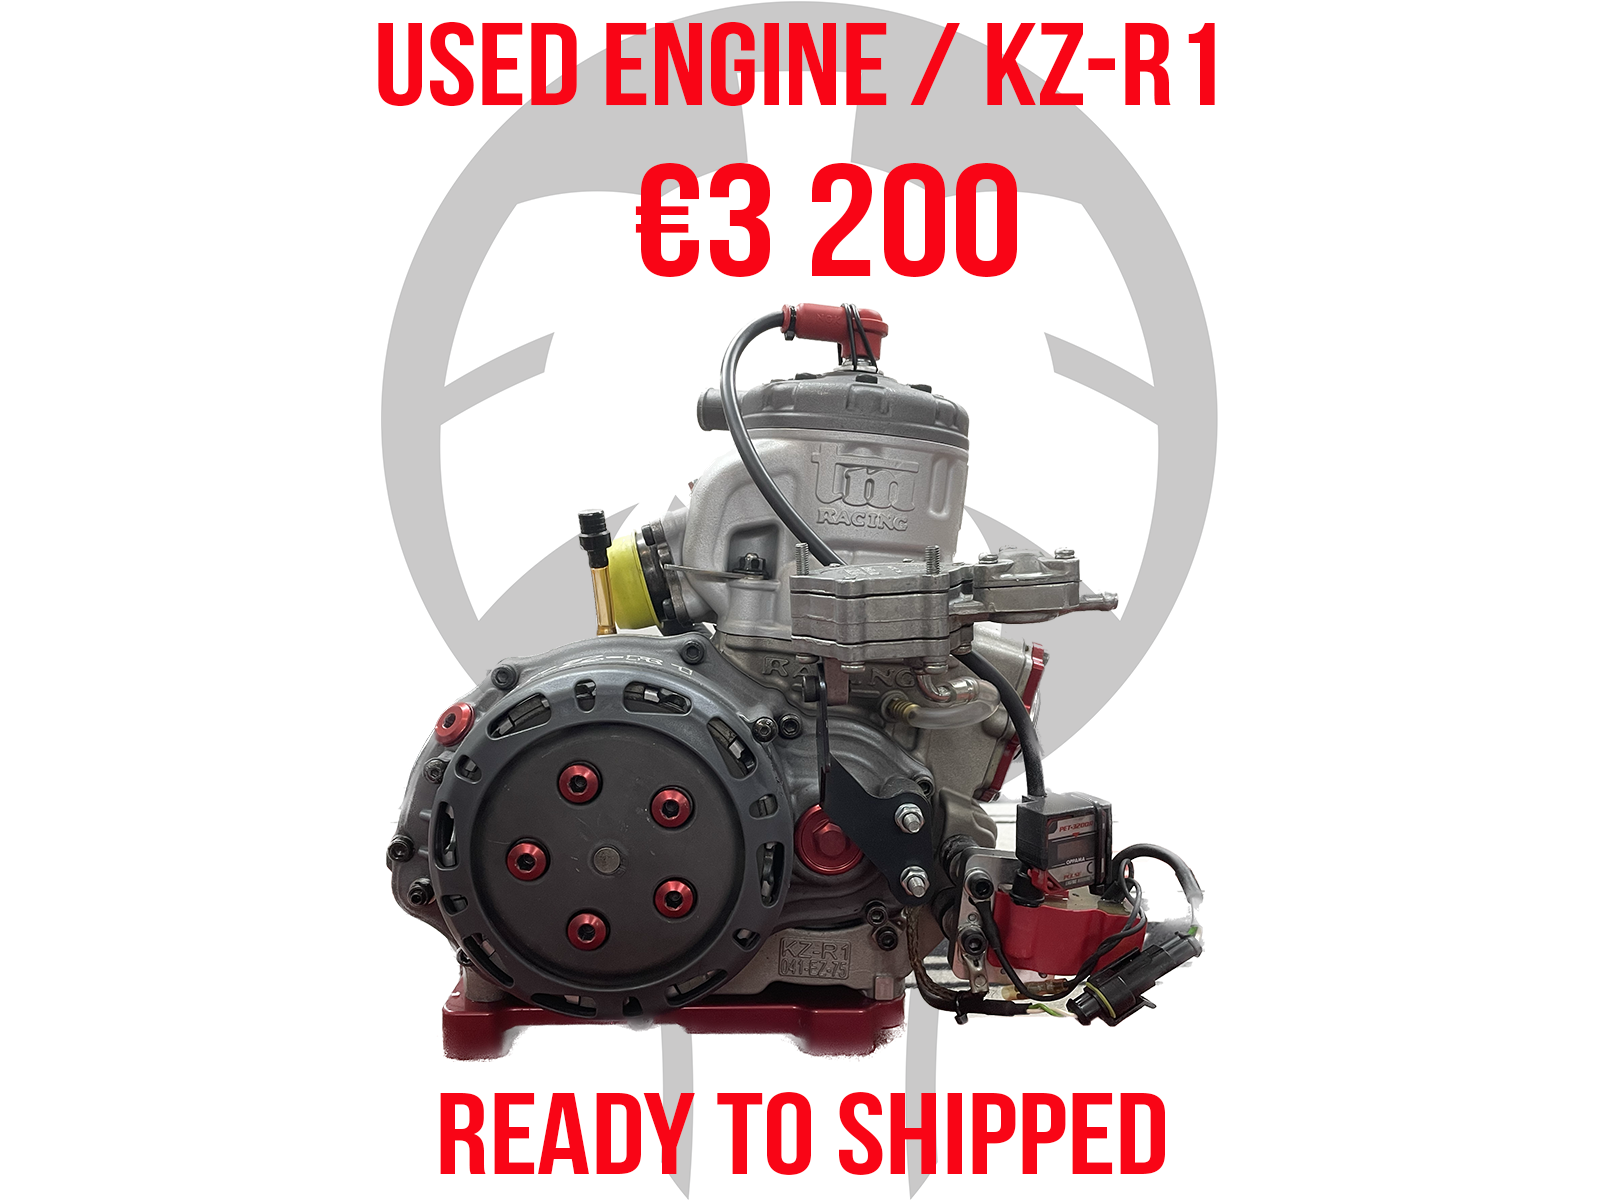 USED ENGINE KZ-R1